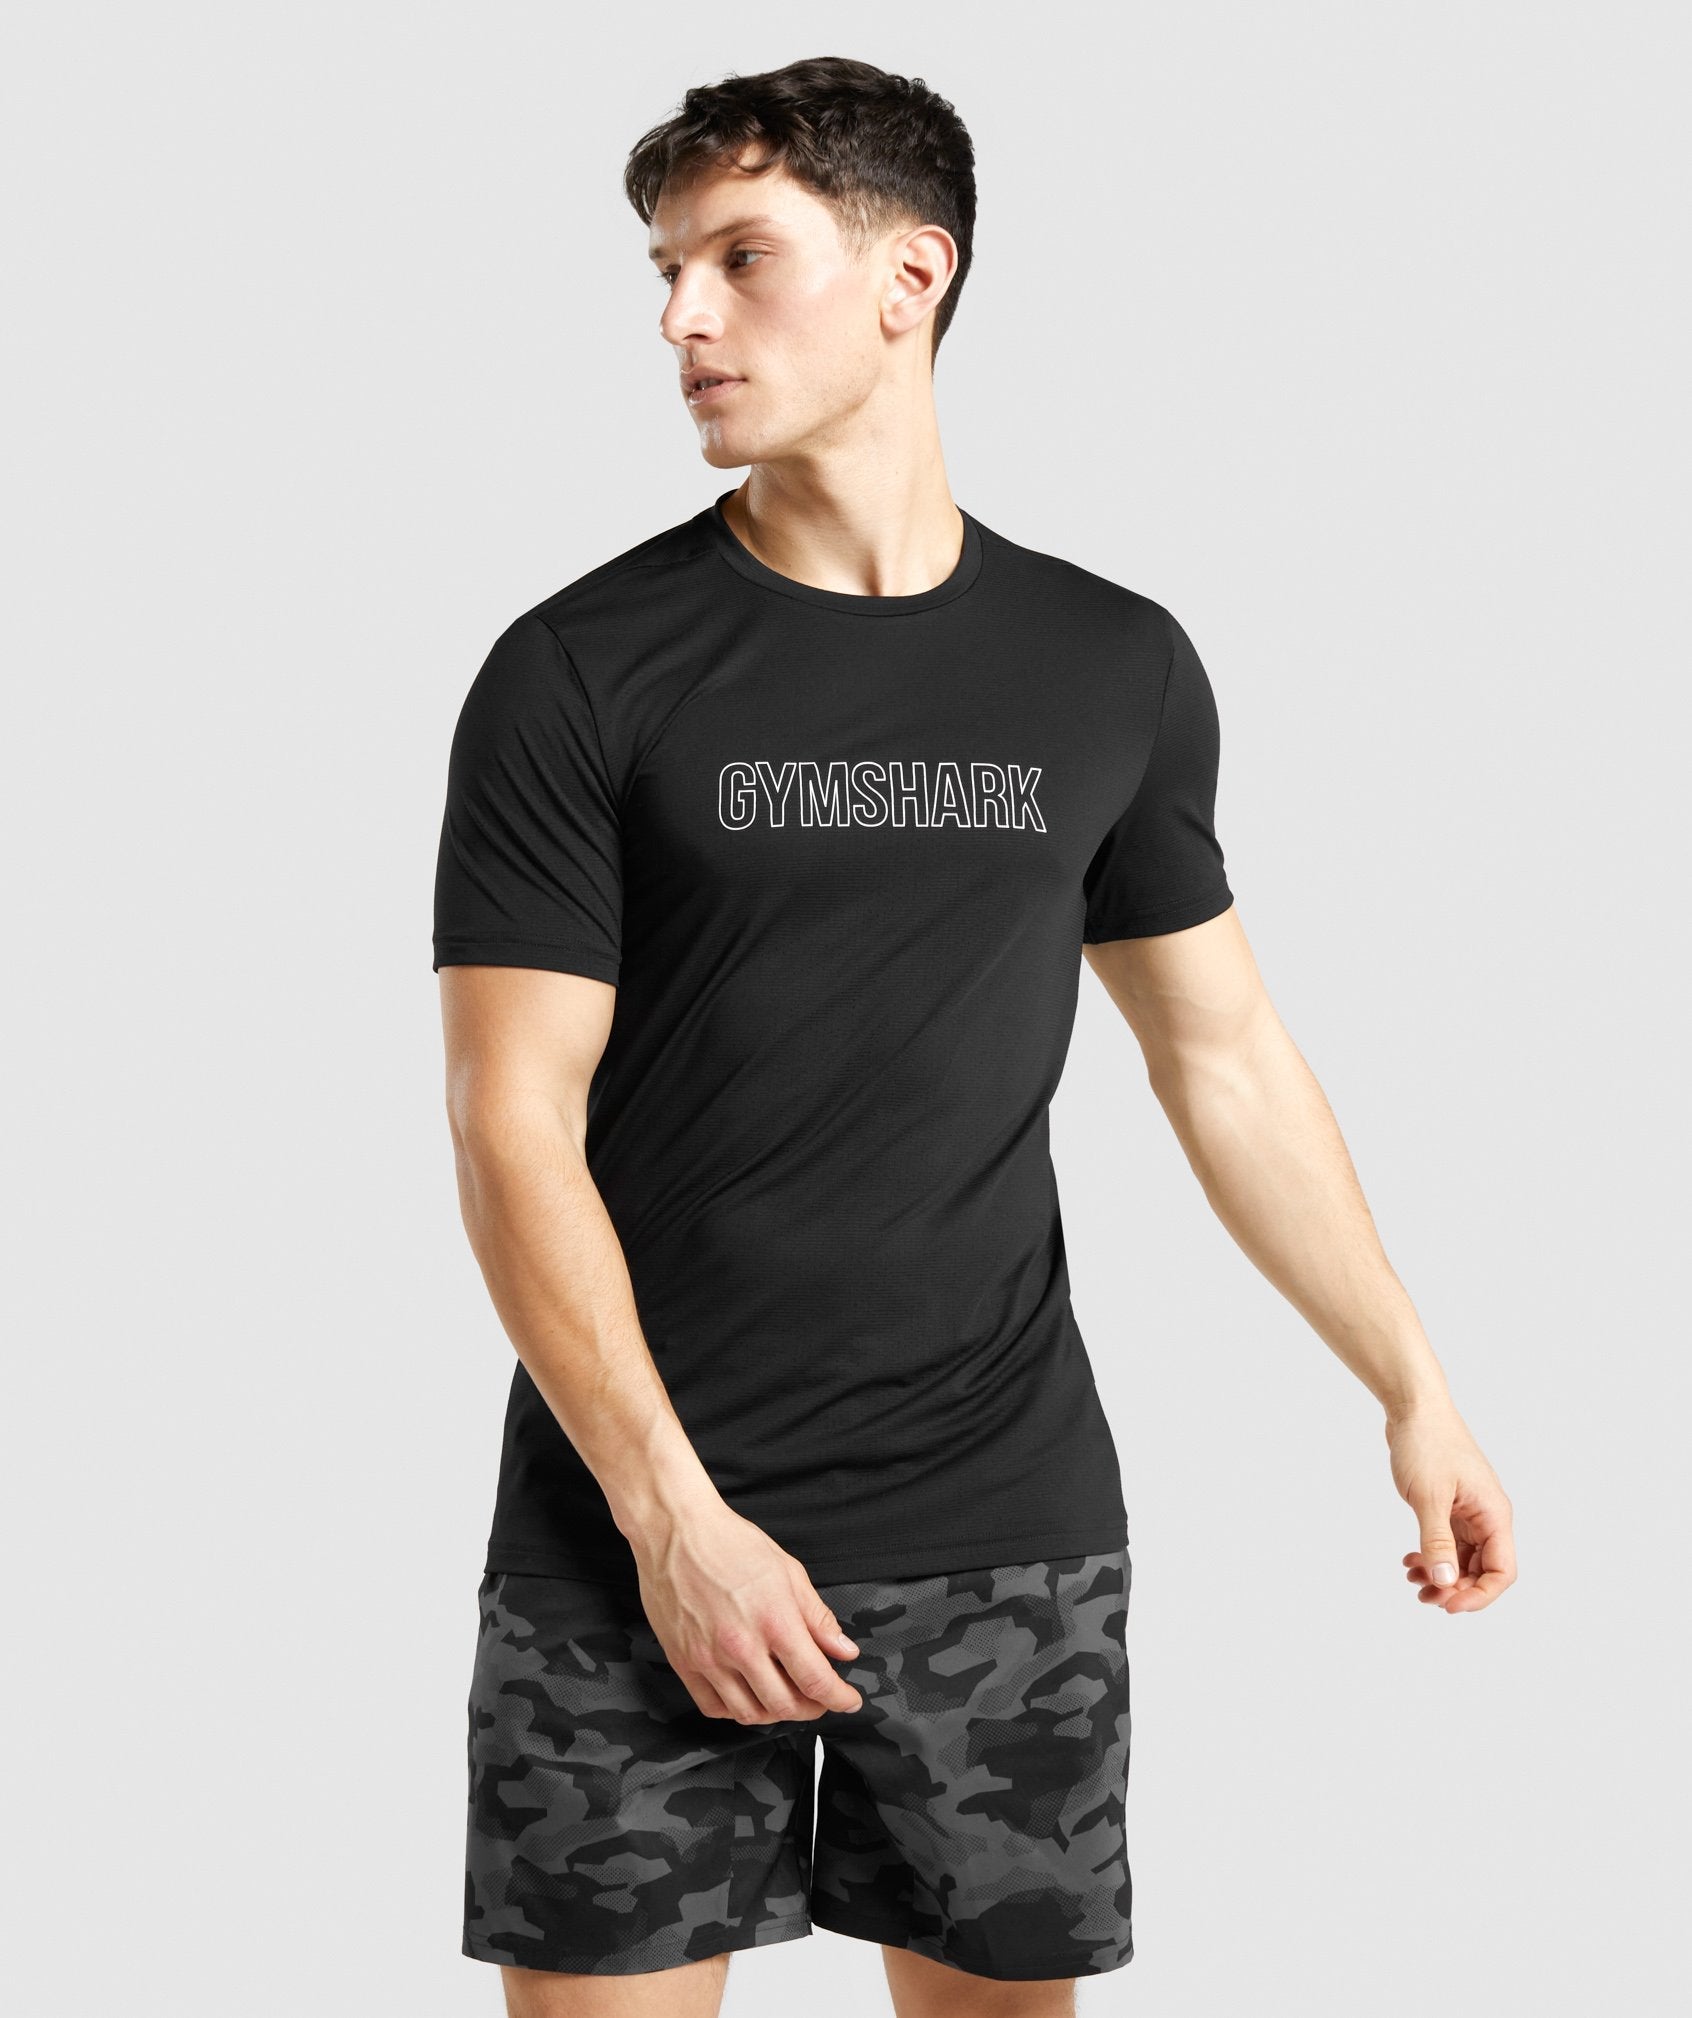 Gymshark Arrival T-Shirt - Black